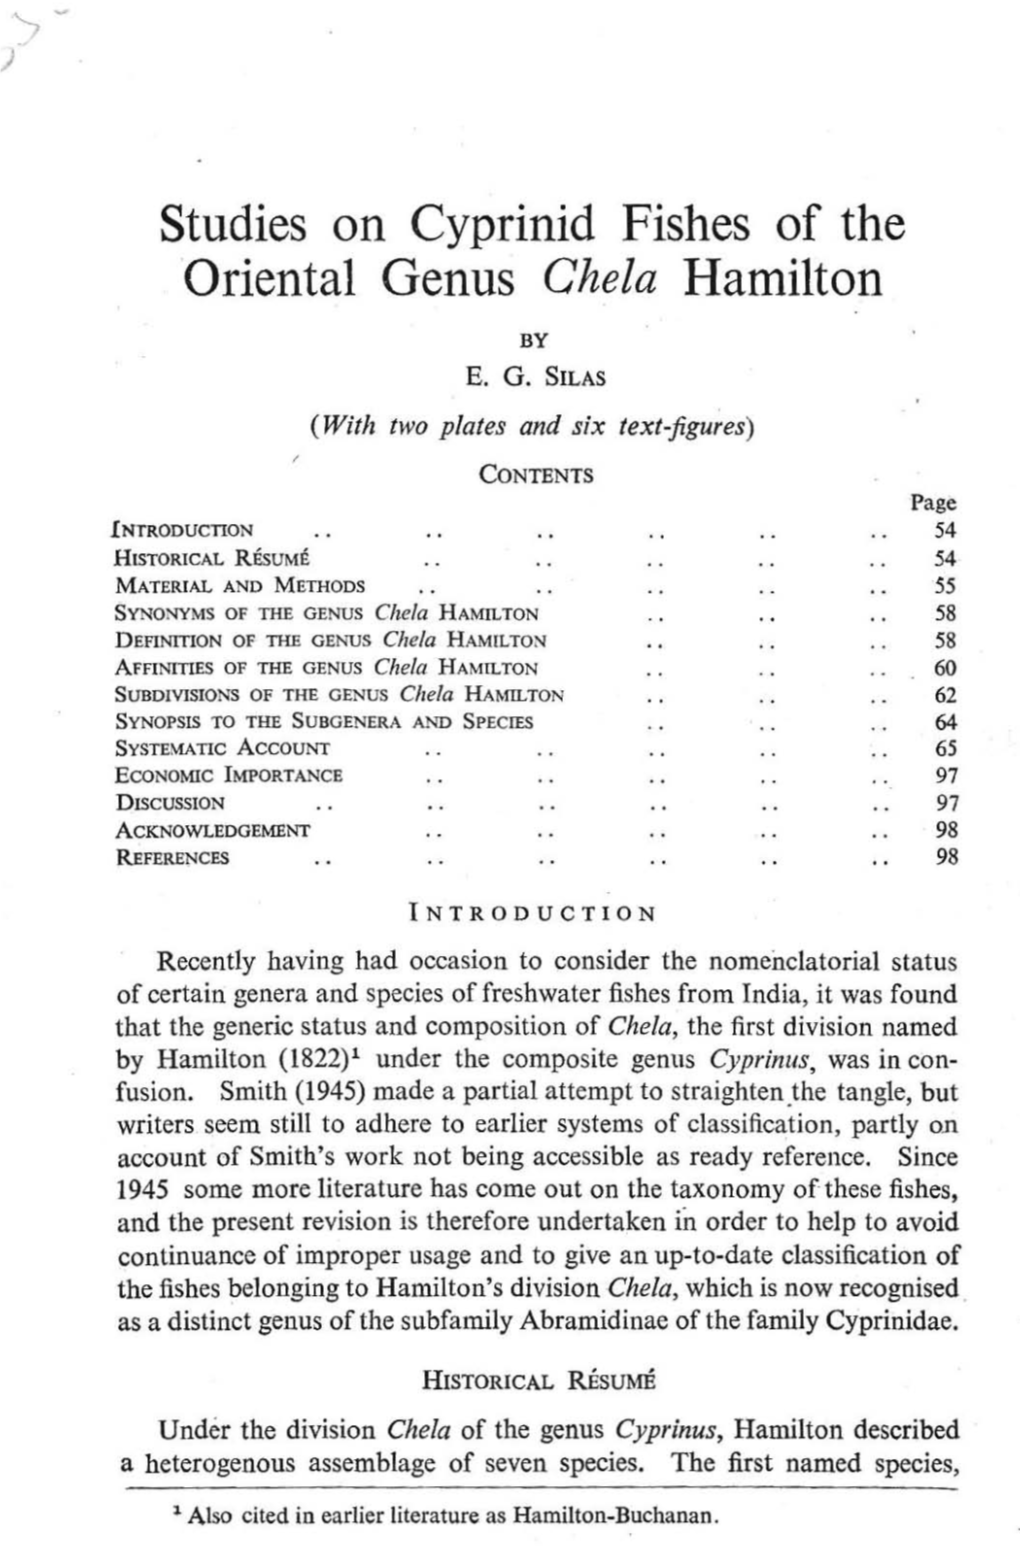 Studies on Cyprinid Fishes of the Oriental Genus Chela Hamilton by E